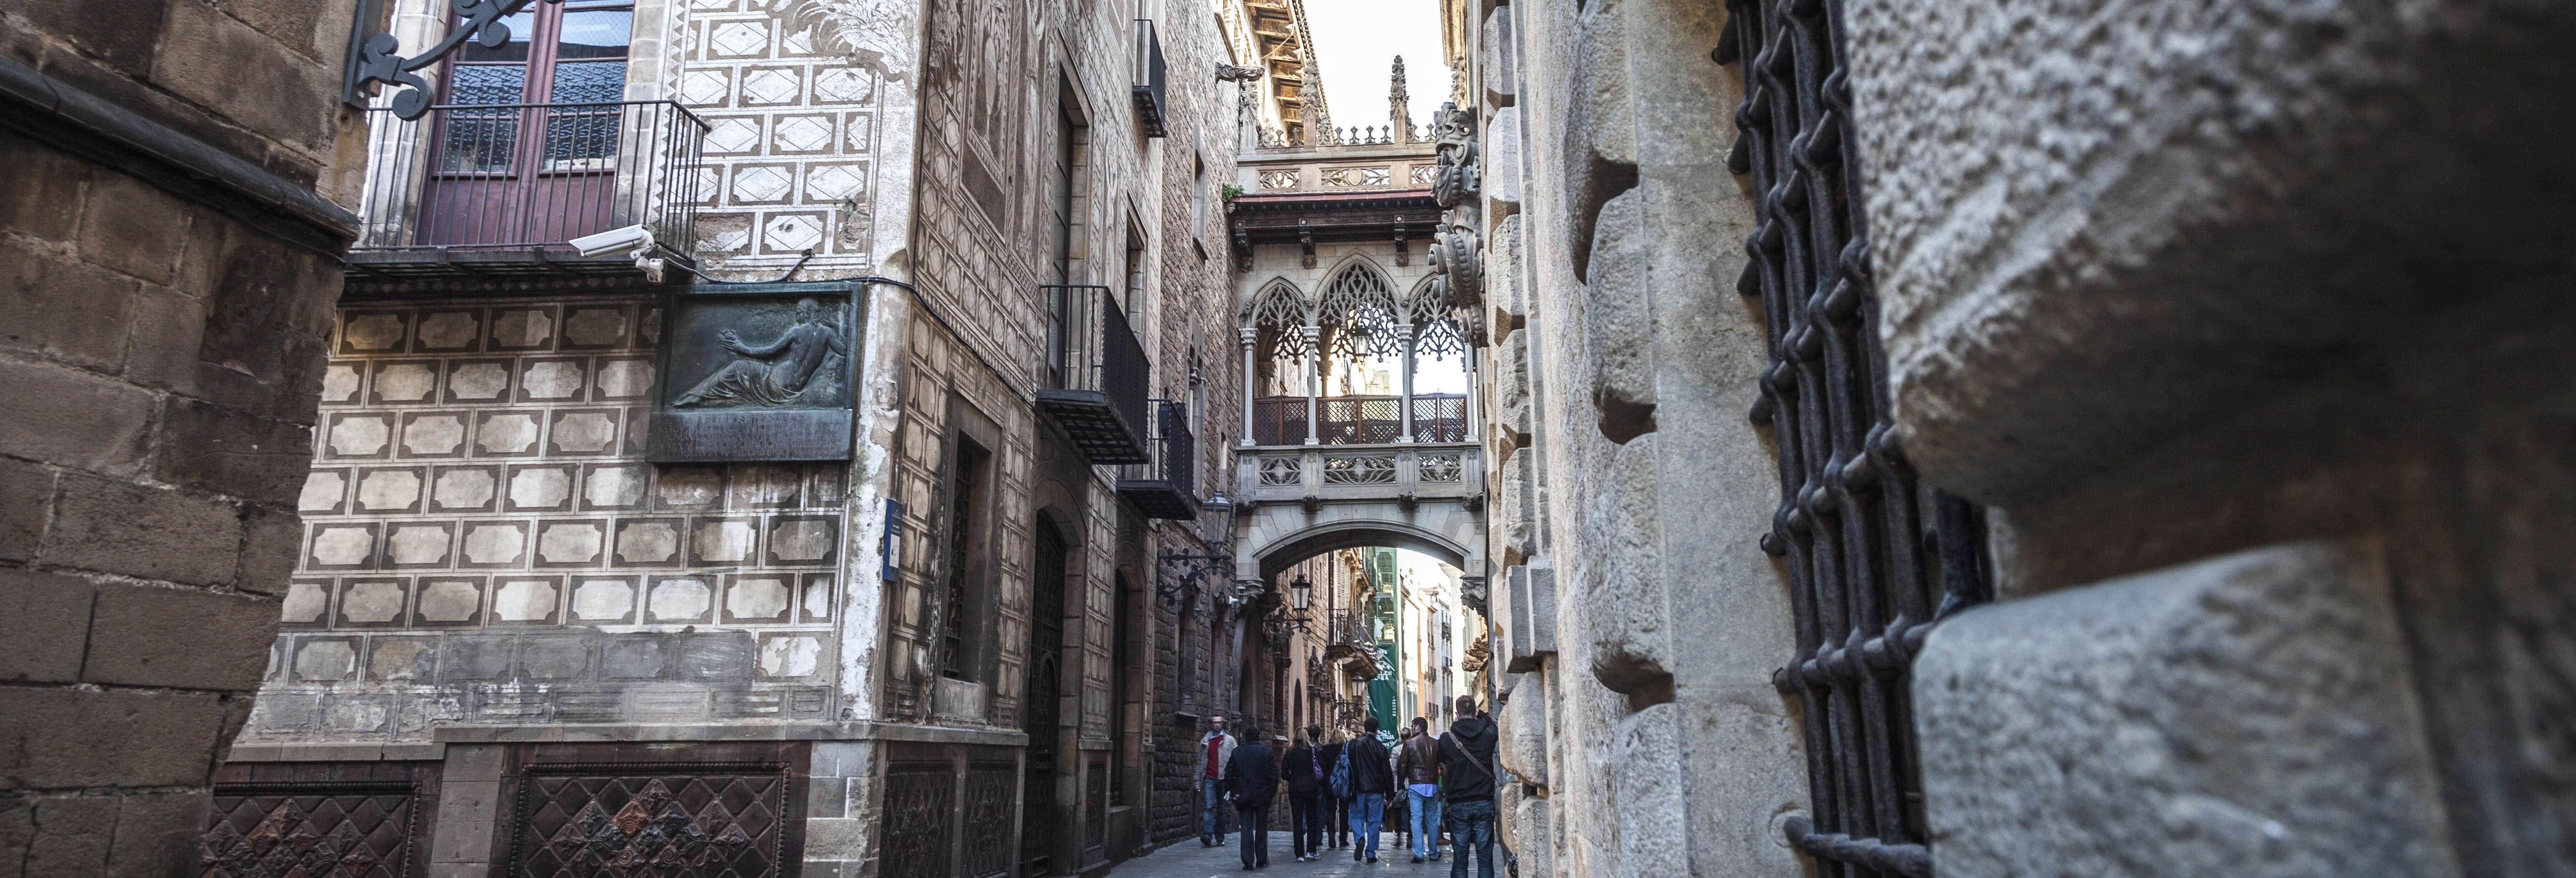 Tour por el barrio judío de Barcelona